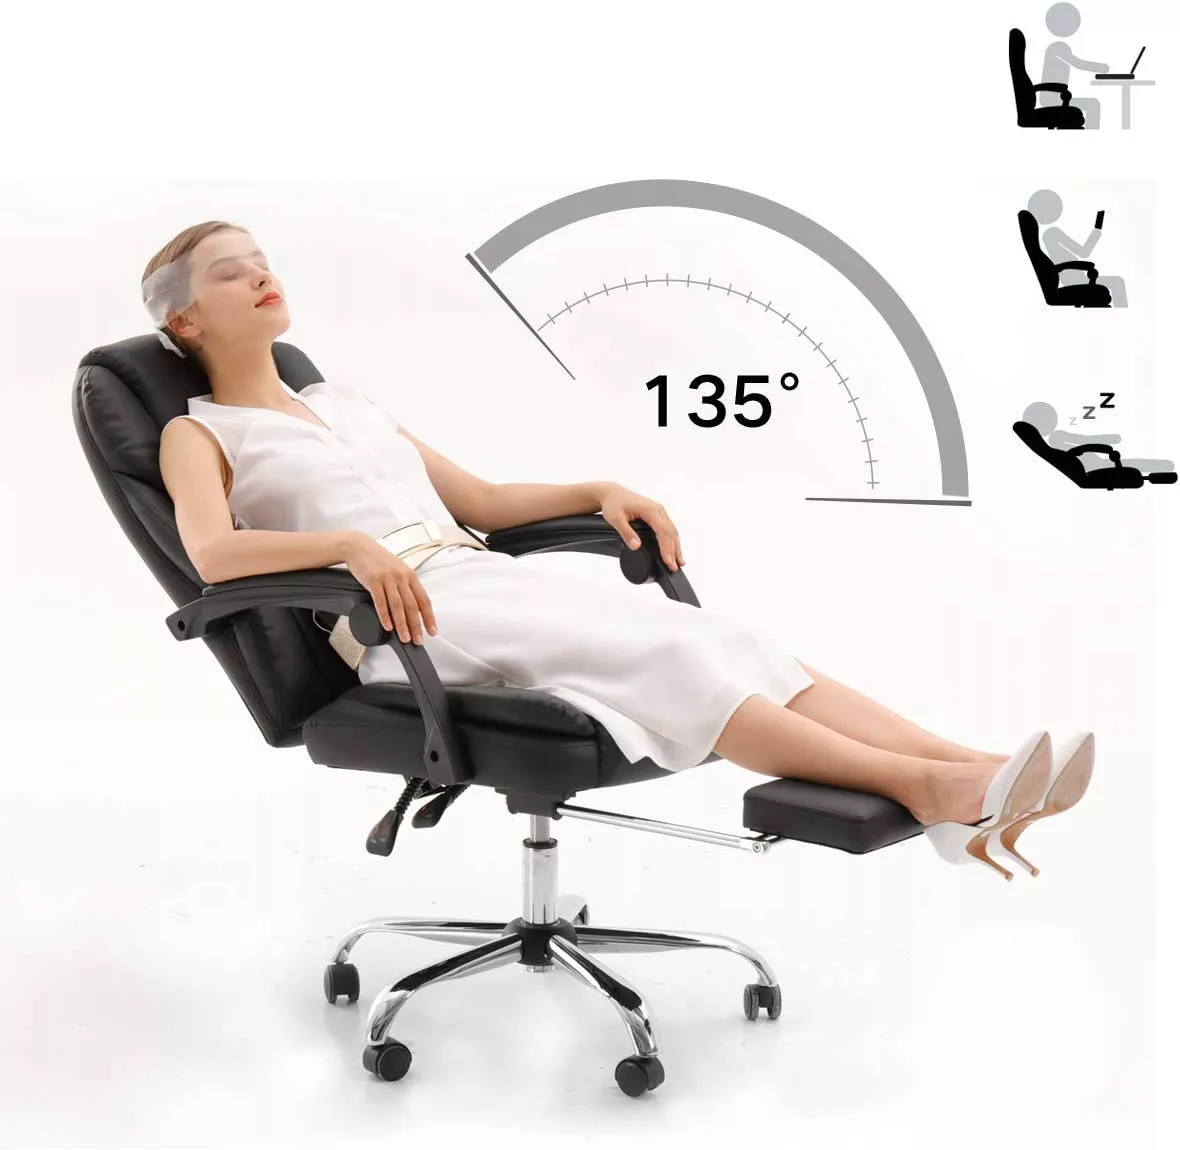 Lay Down Flat Office Chair full recline